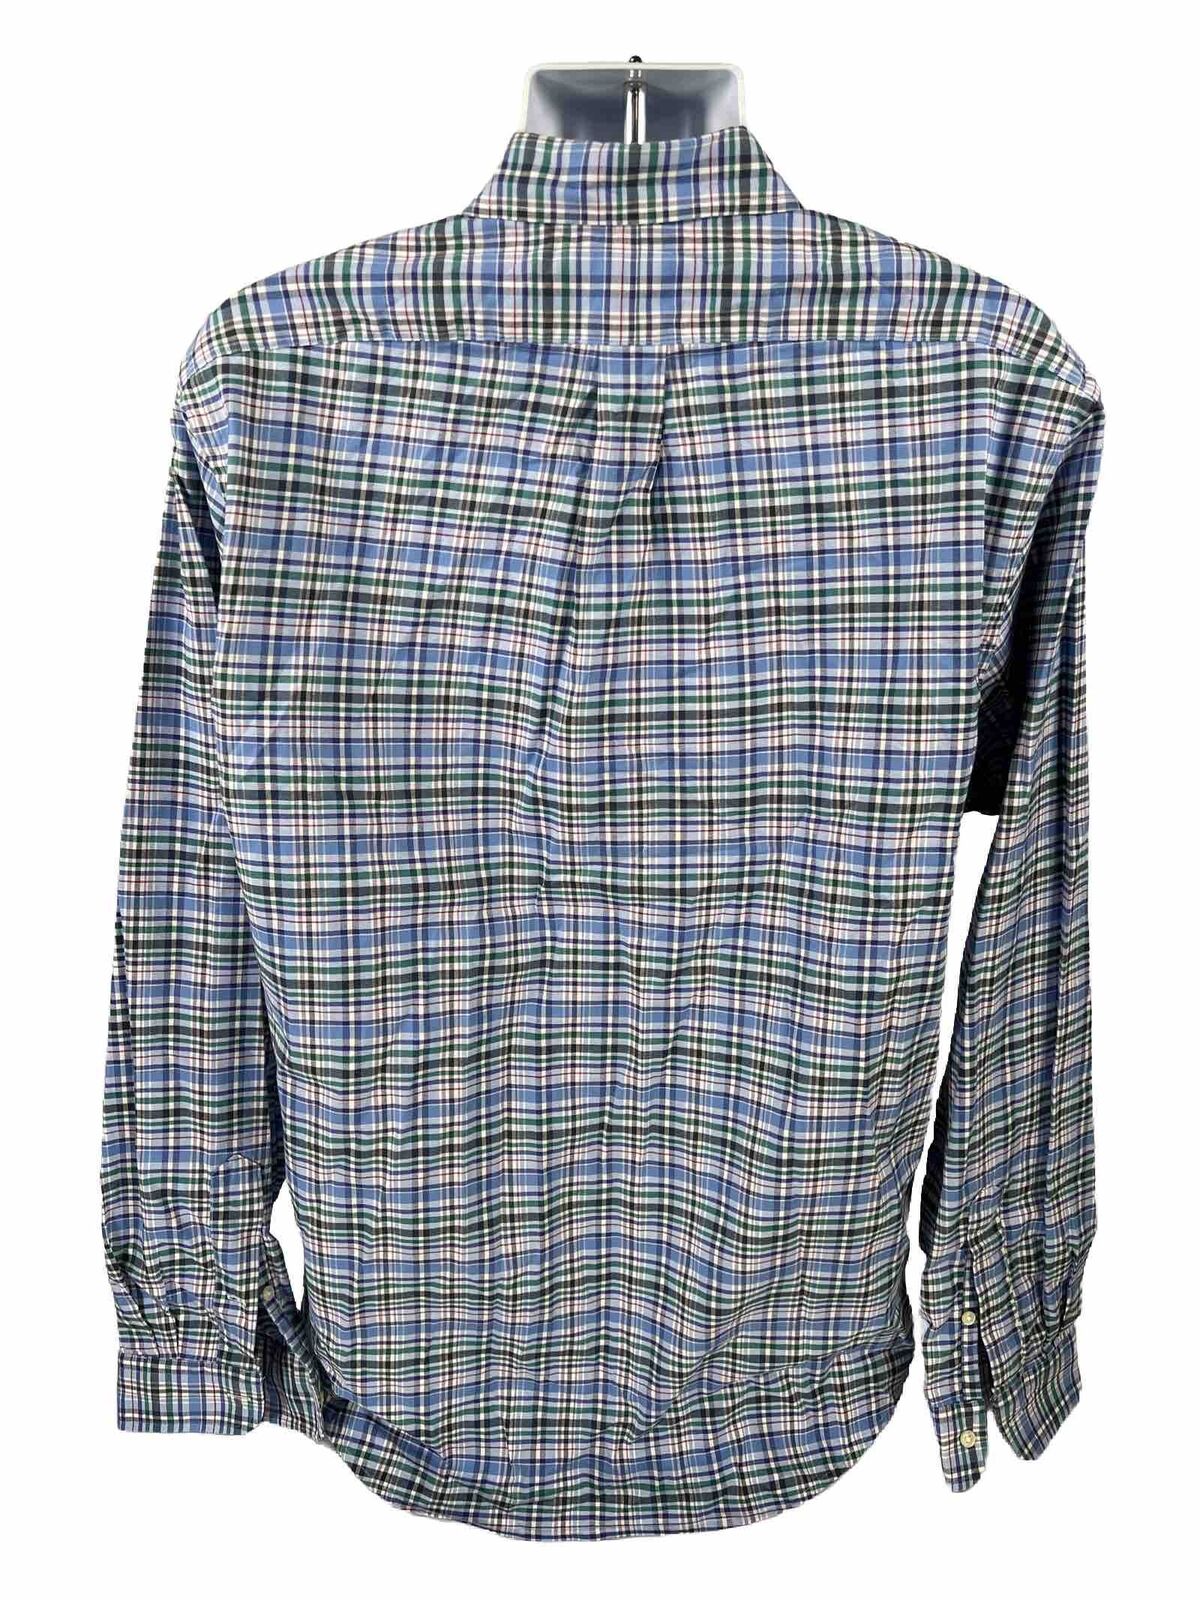 Ralph Lauren Men's Blue Plaid Long Sleeve Slim Fit Button Up Shirt - XL